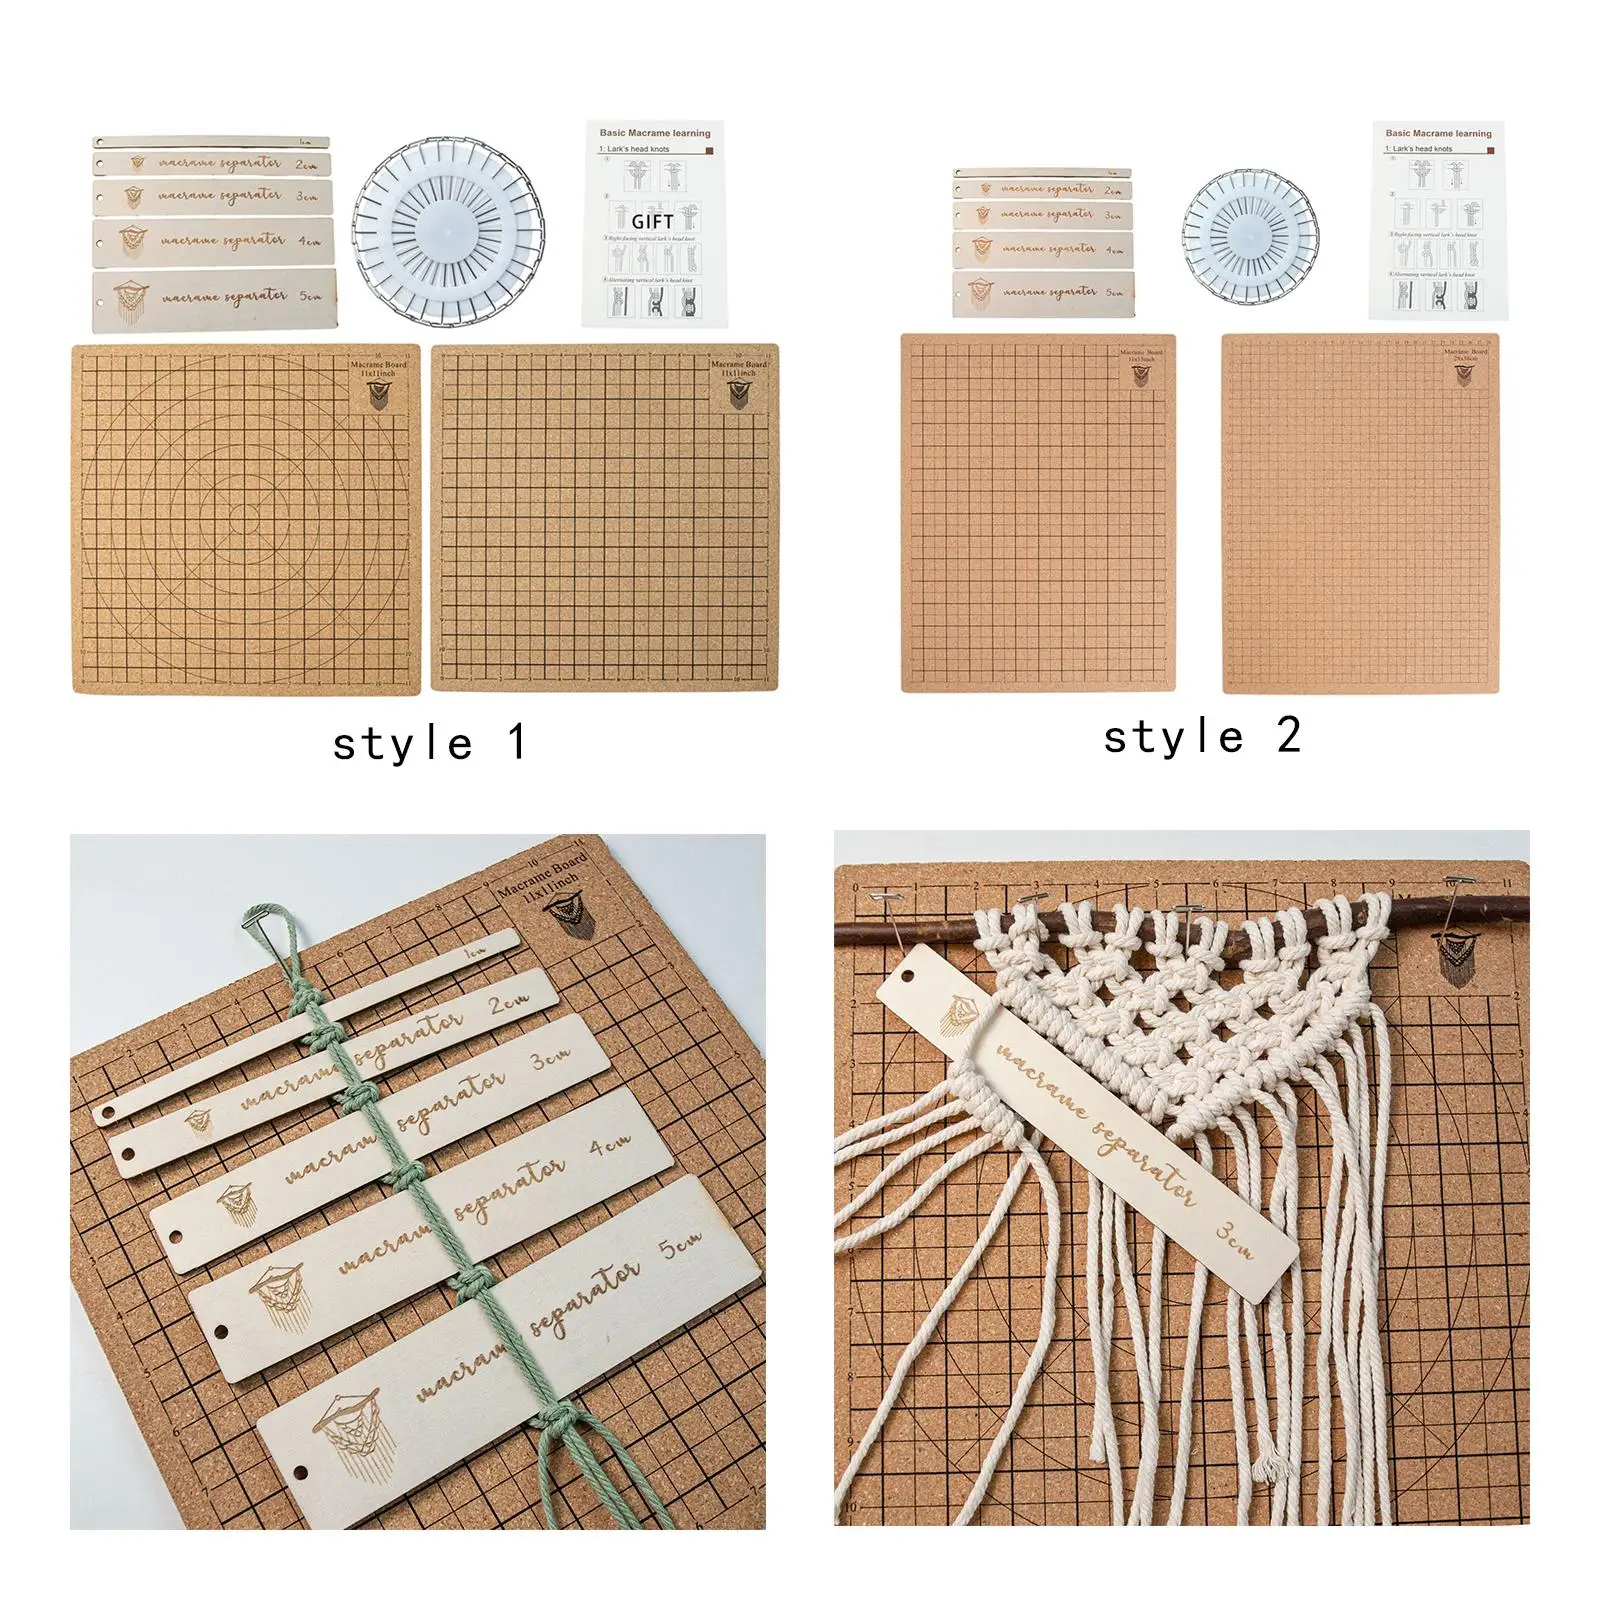 Macrame Board Macrame Project Board Macrame Knot Sturdy Ruler Handmade Portable for Crocheting Weaving Knitting Measuring Tools